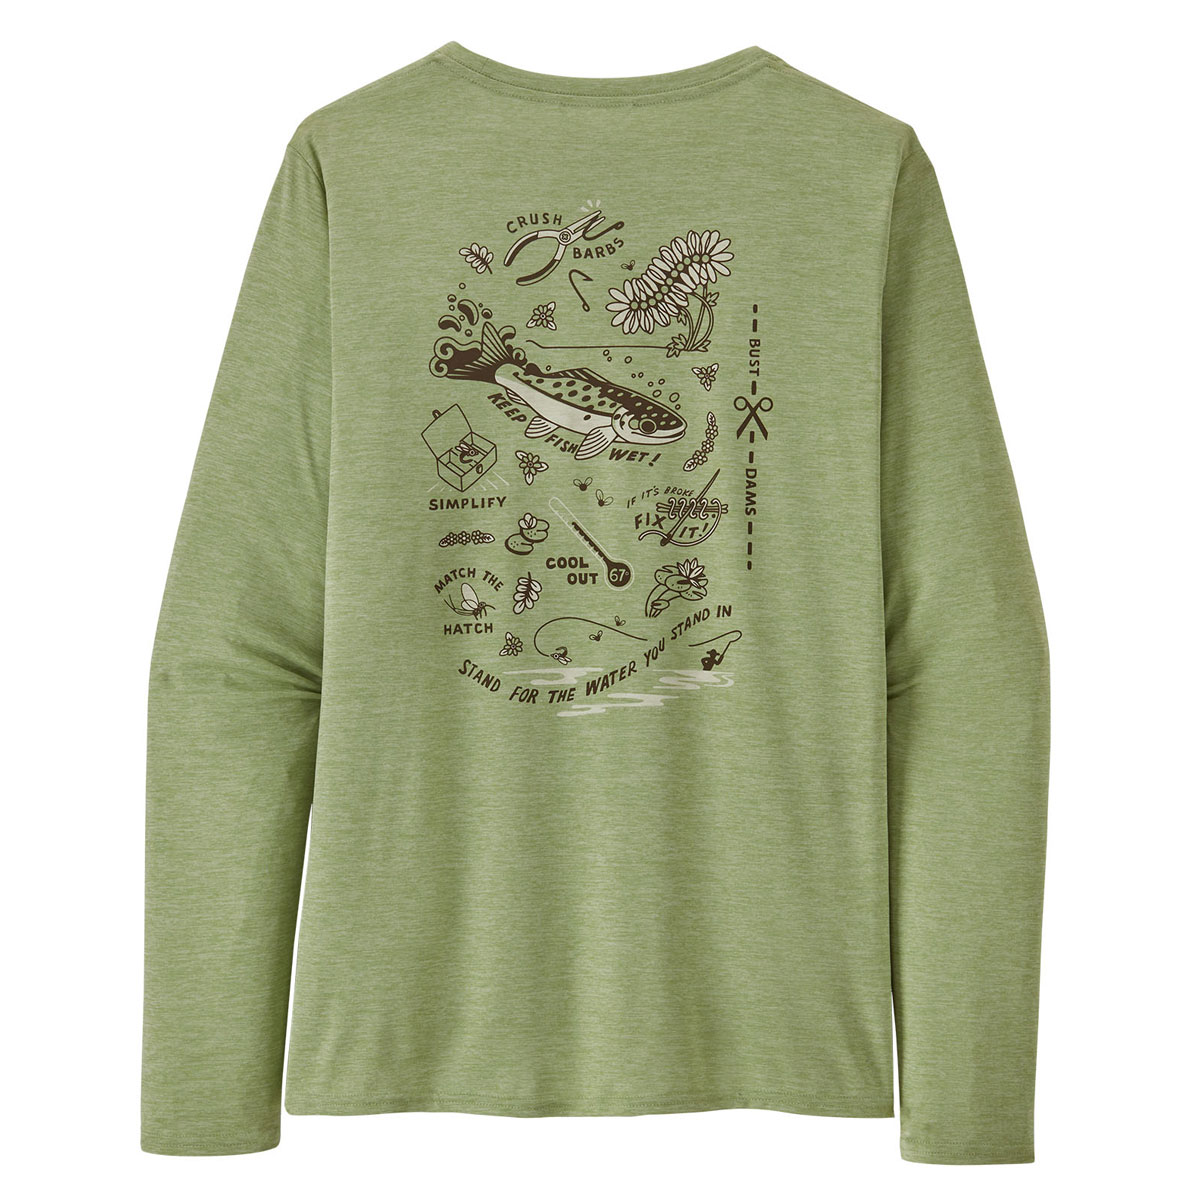 https://p7014794.vo.llnwd.net/e1/media/catalog/product/p/a/patagonia-womens-long-sleeved-cool-graphic-shirt-salvia-green.jpg